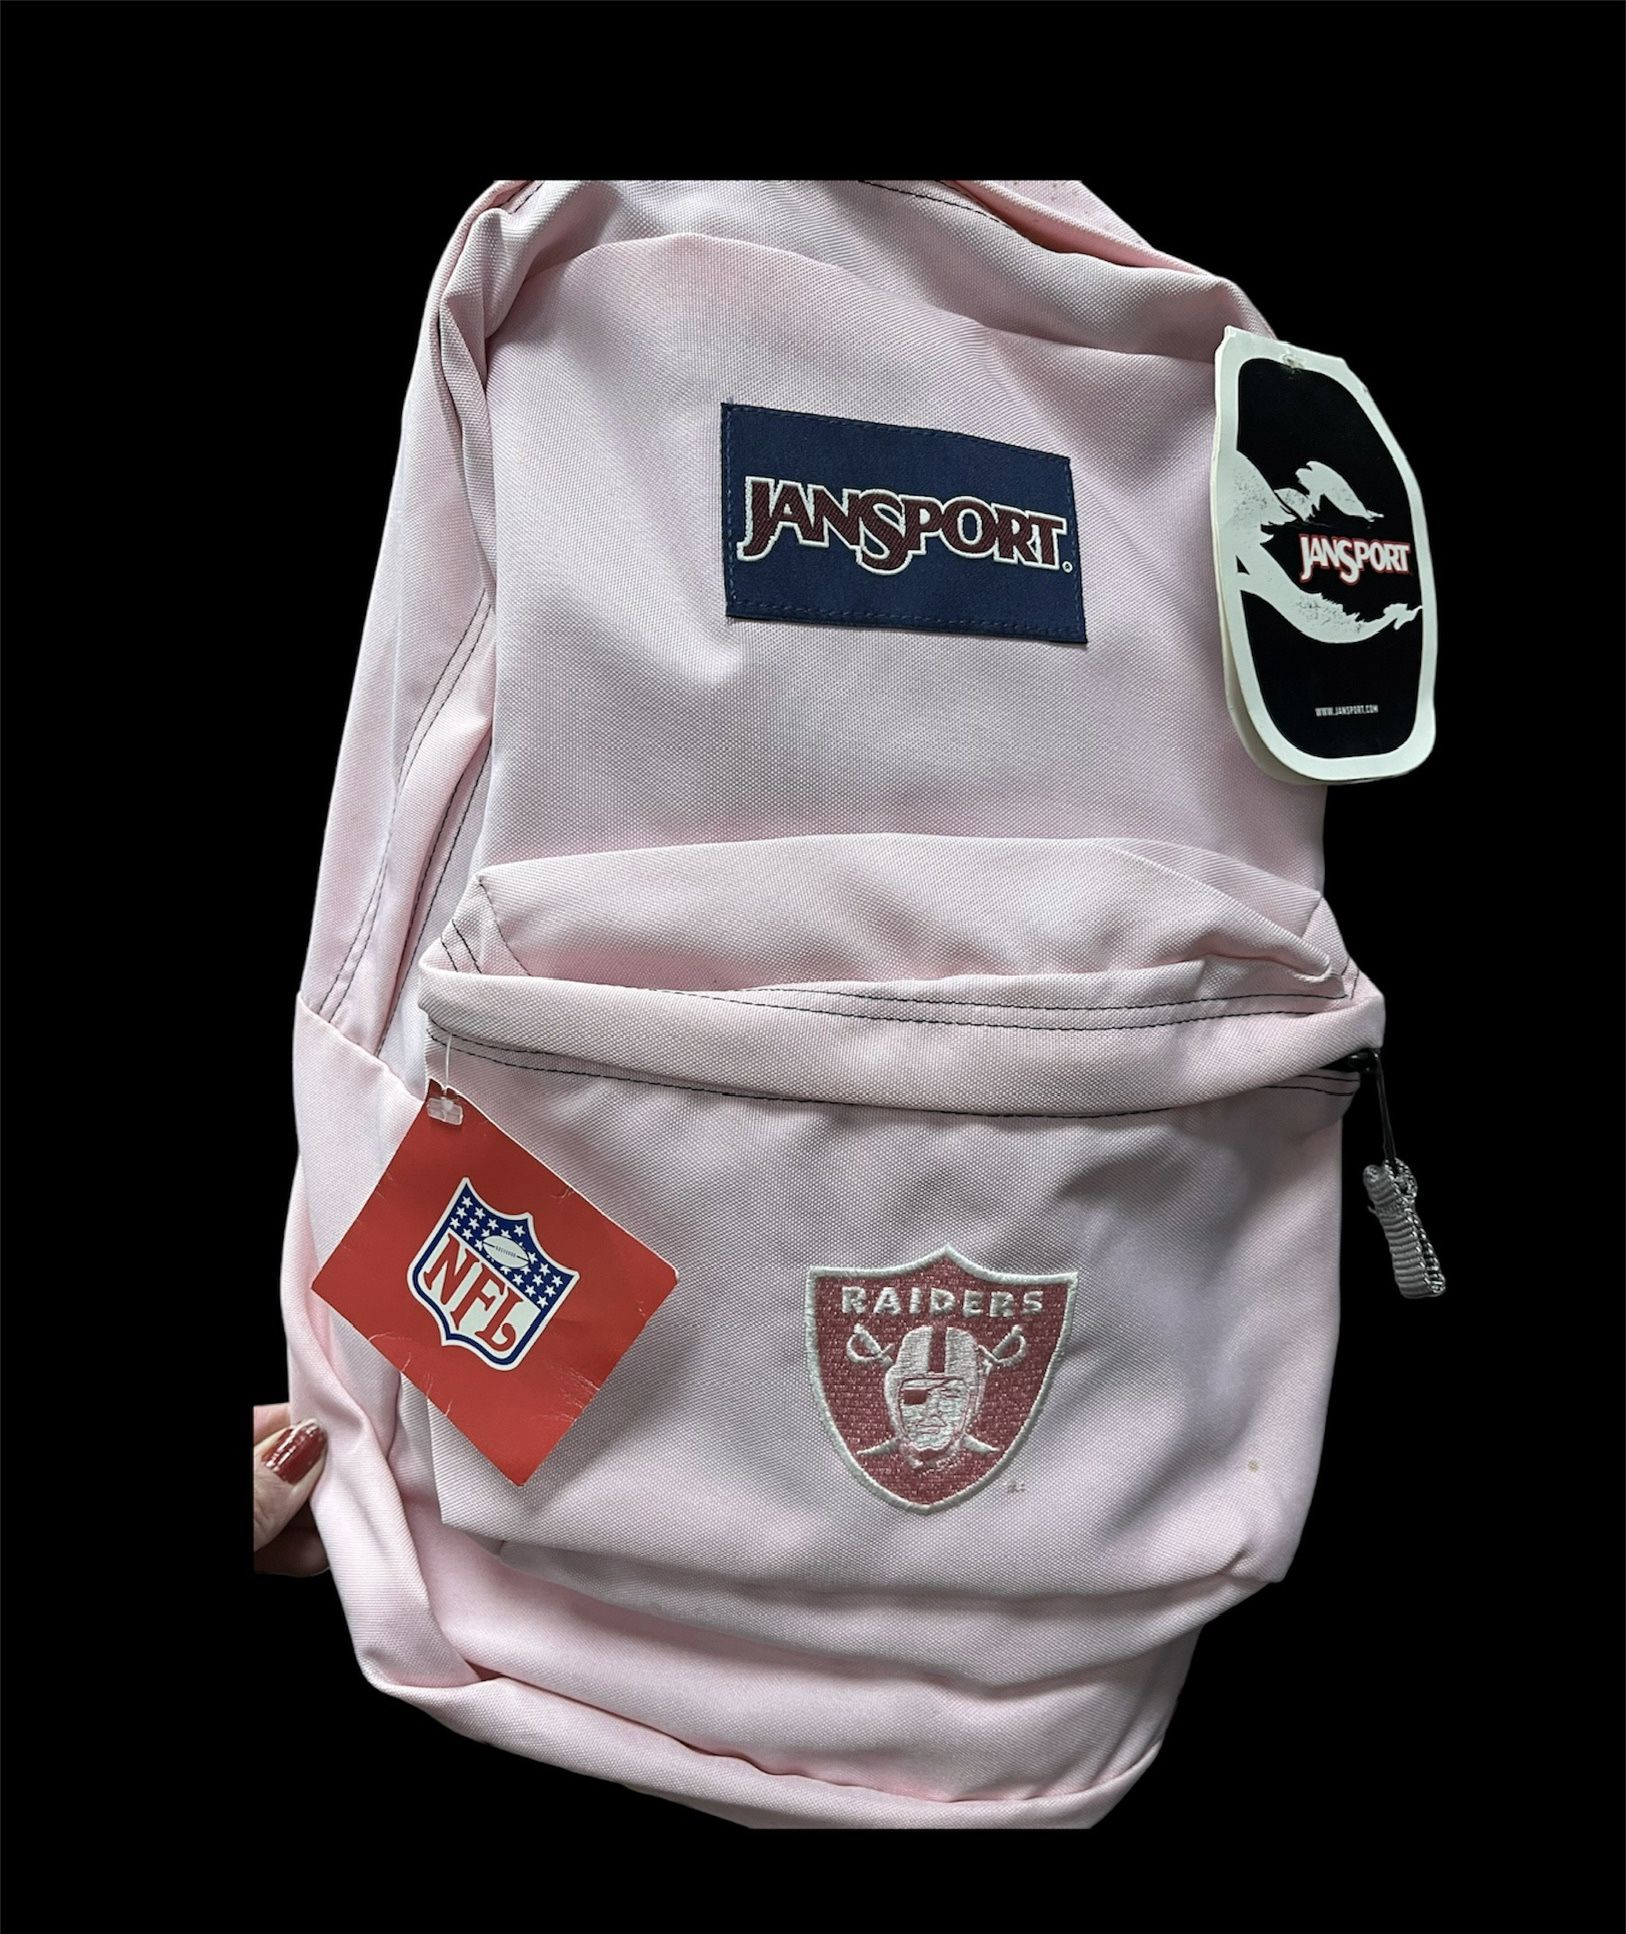 Raiders Jansport NFL backpack 